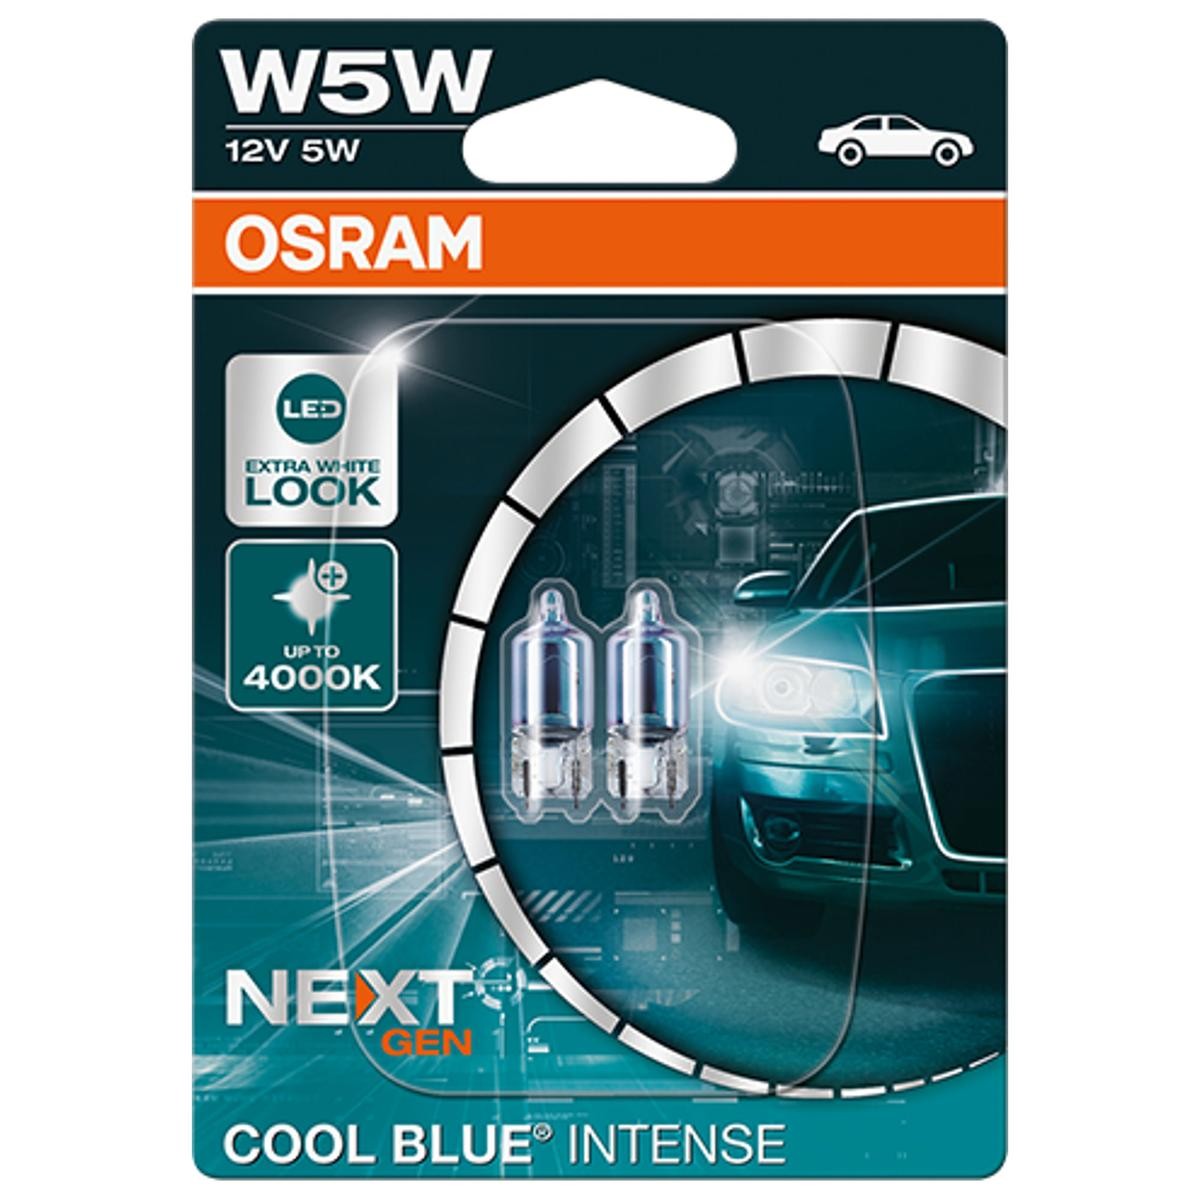 BMW S Blinkerbirne 12V 5W, W5W OSRAM COOL BLUE INTENSE next Generation 2825CBN-02B